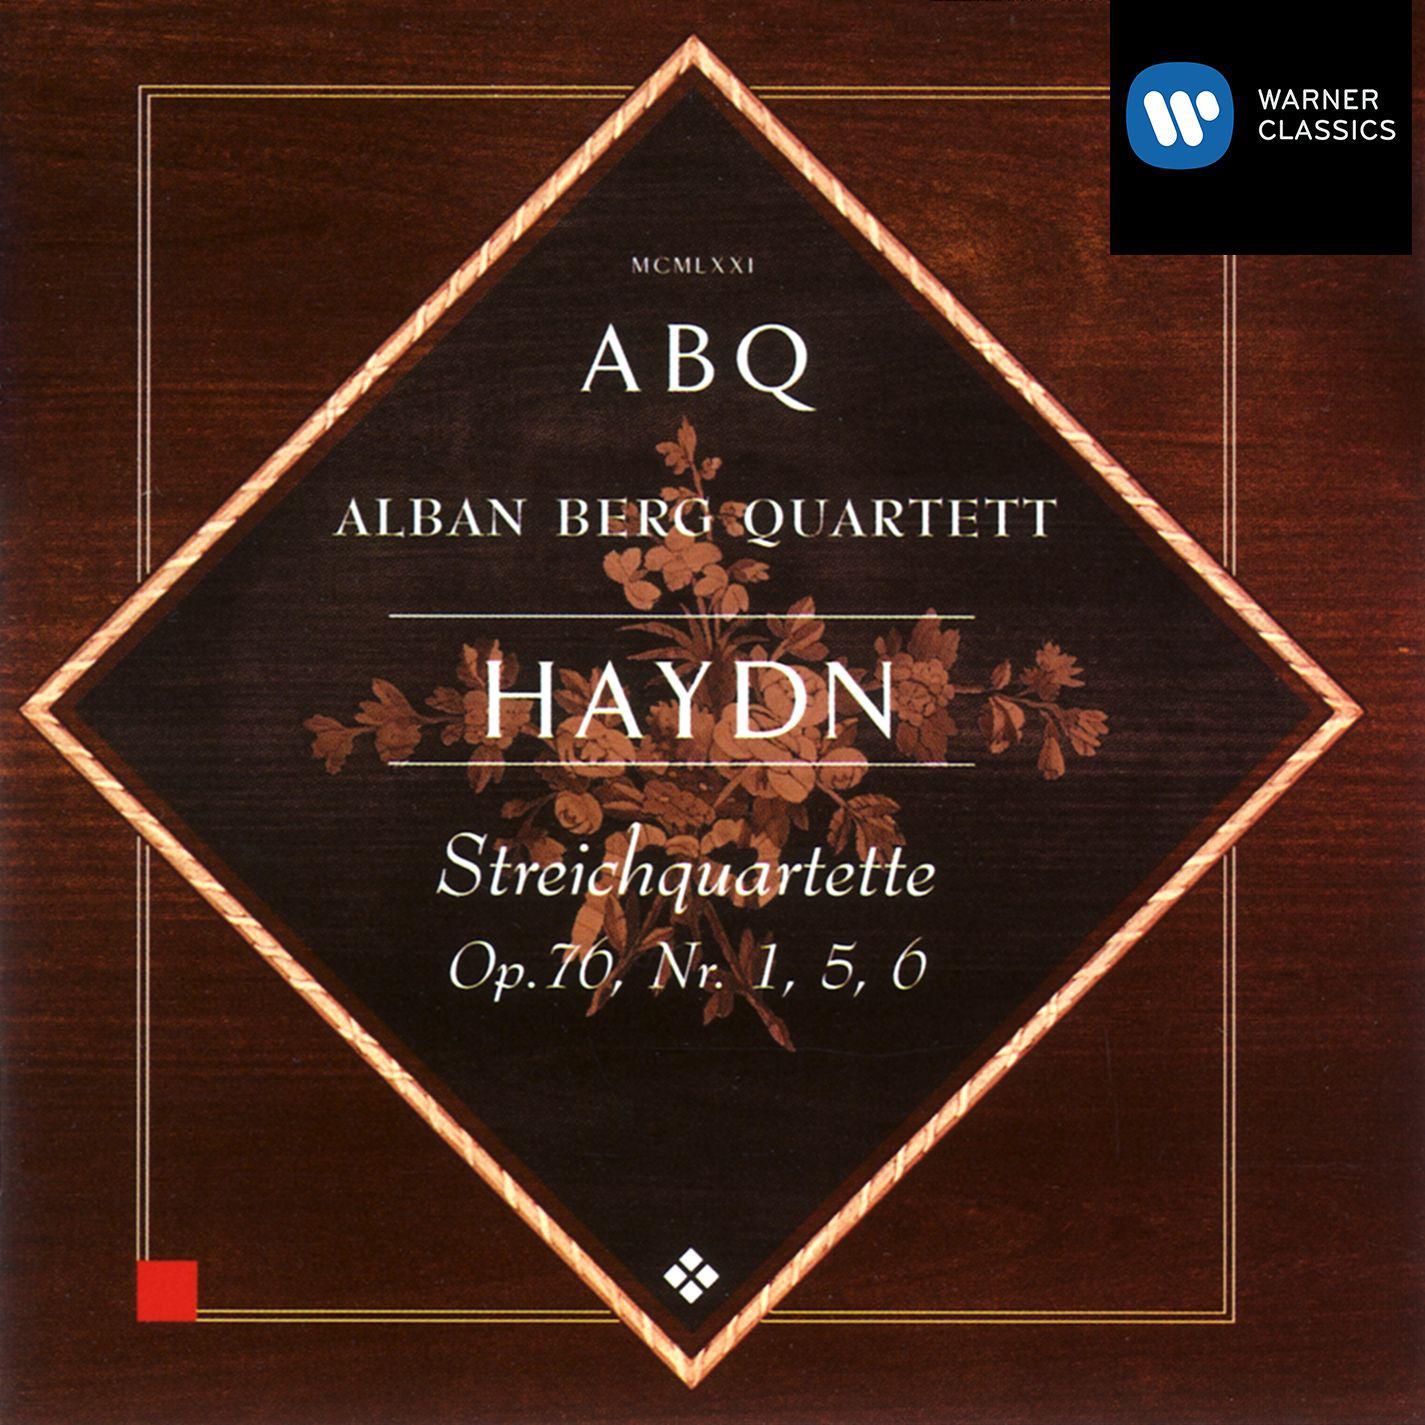 String Quartet in G Op. 76 No. 1: II. Adagio sostenuto